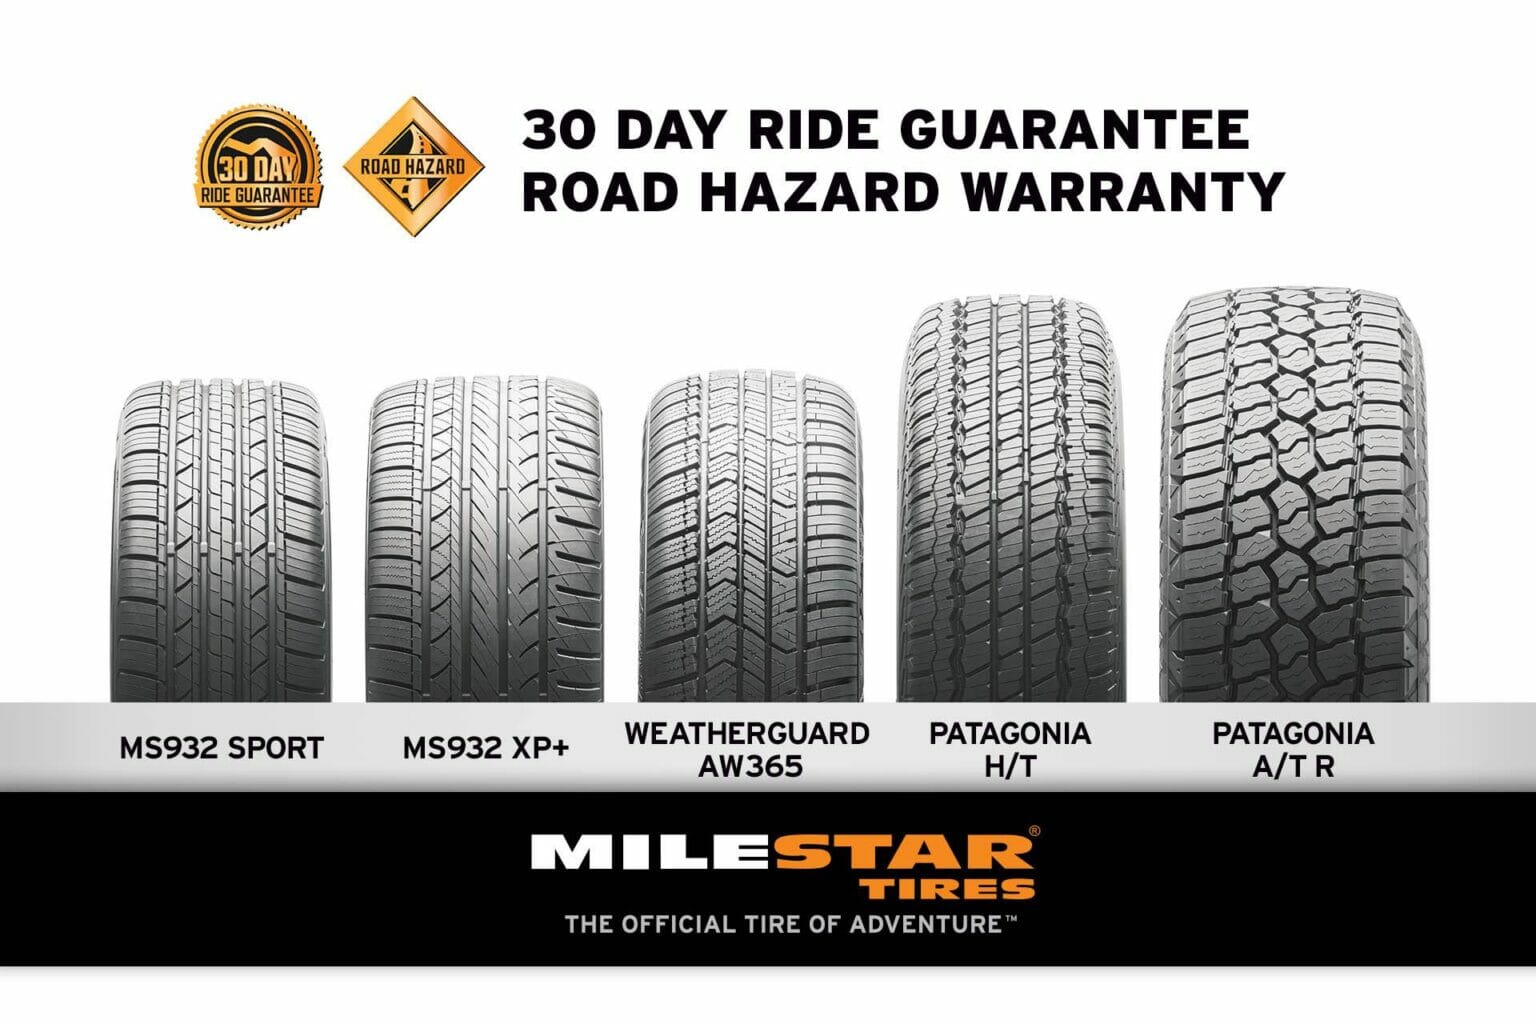 milestar 30 day ride guarantee and road hazard